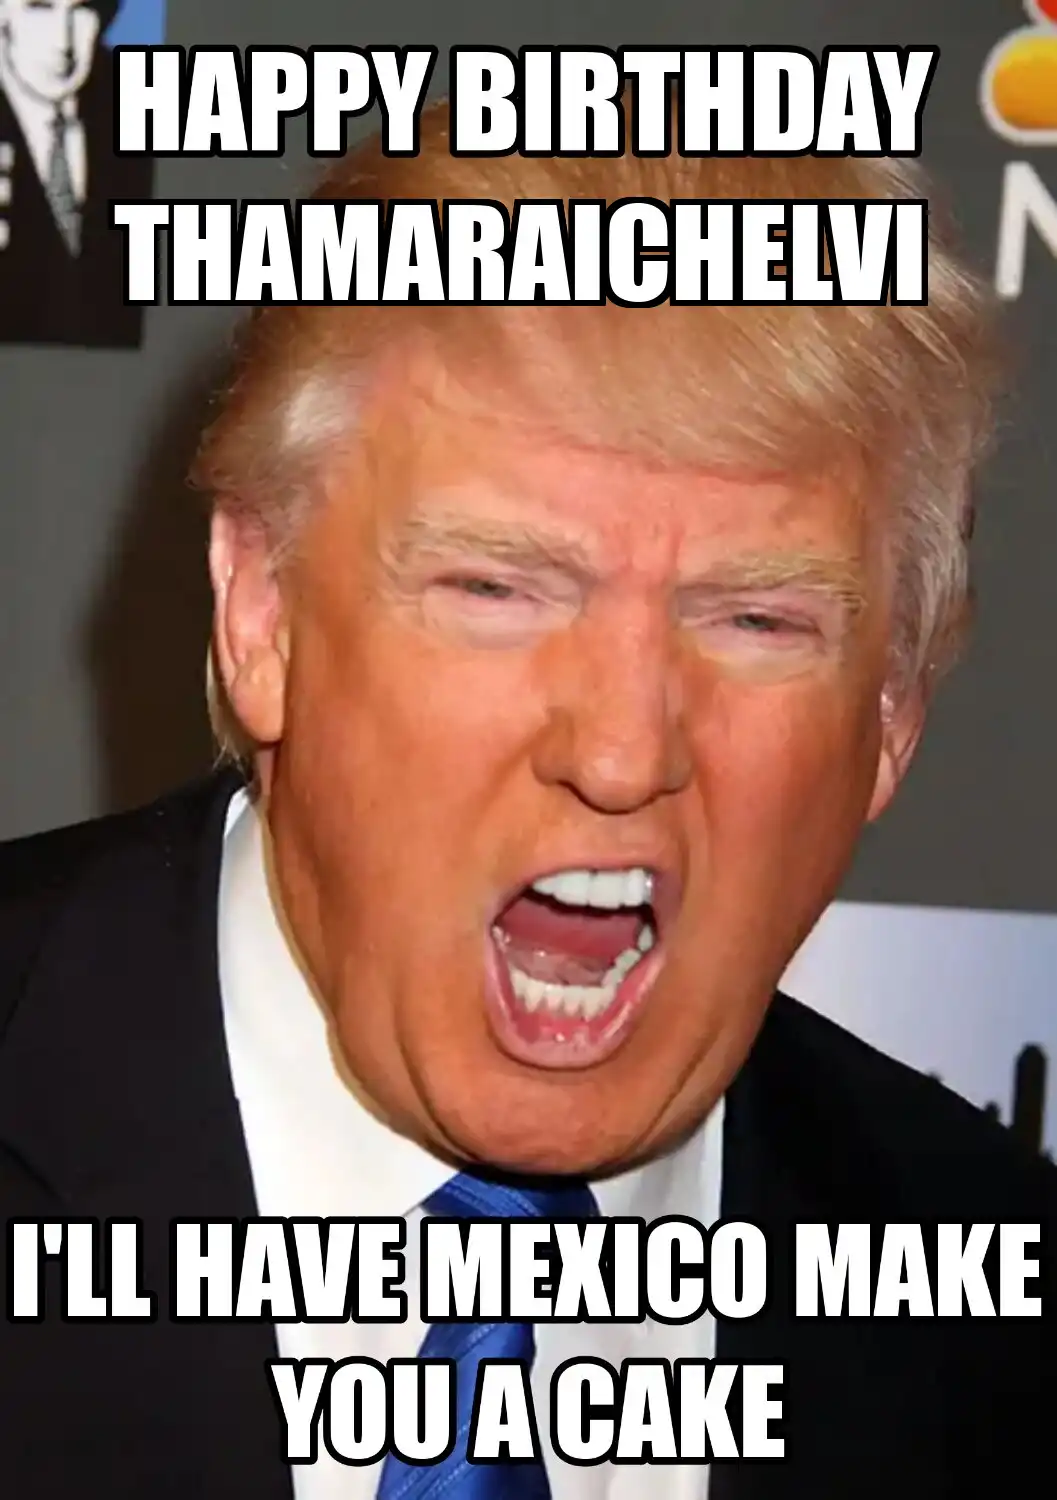 Happy Birthday Thamaraichelvi Mexico Make You A Cake Meme